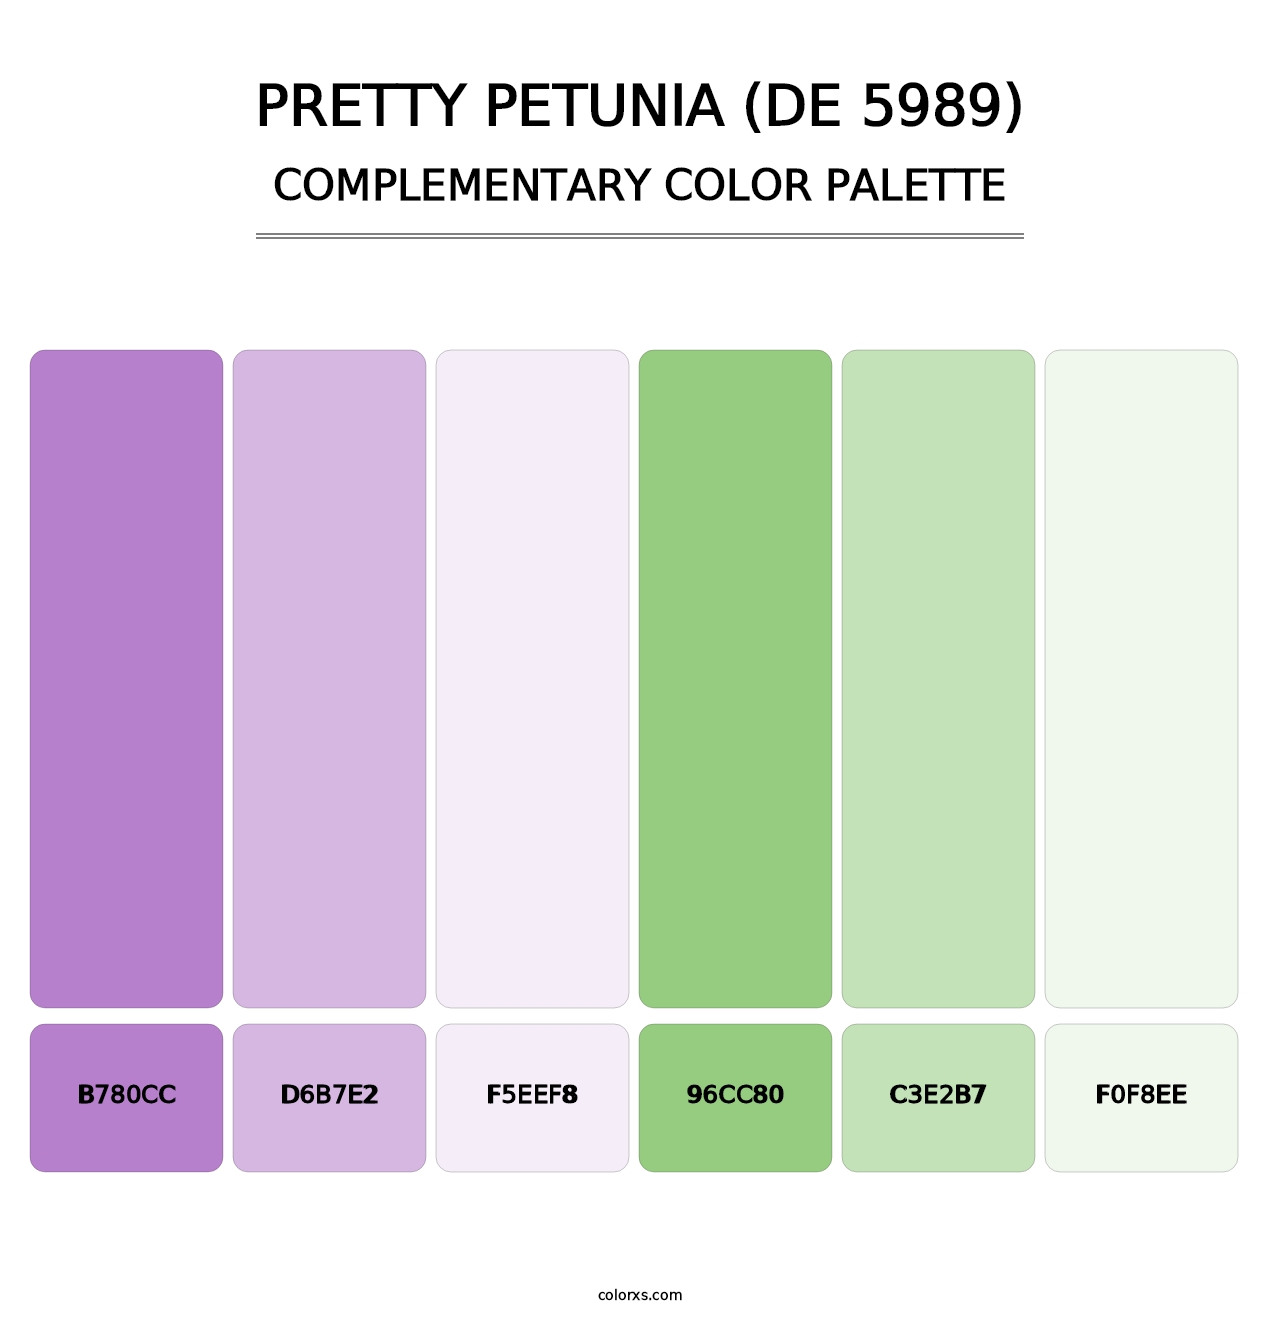 Pretty Petunia (DE 5989) - Complementary Color Palette